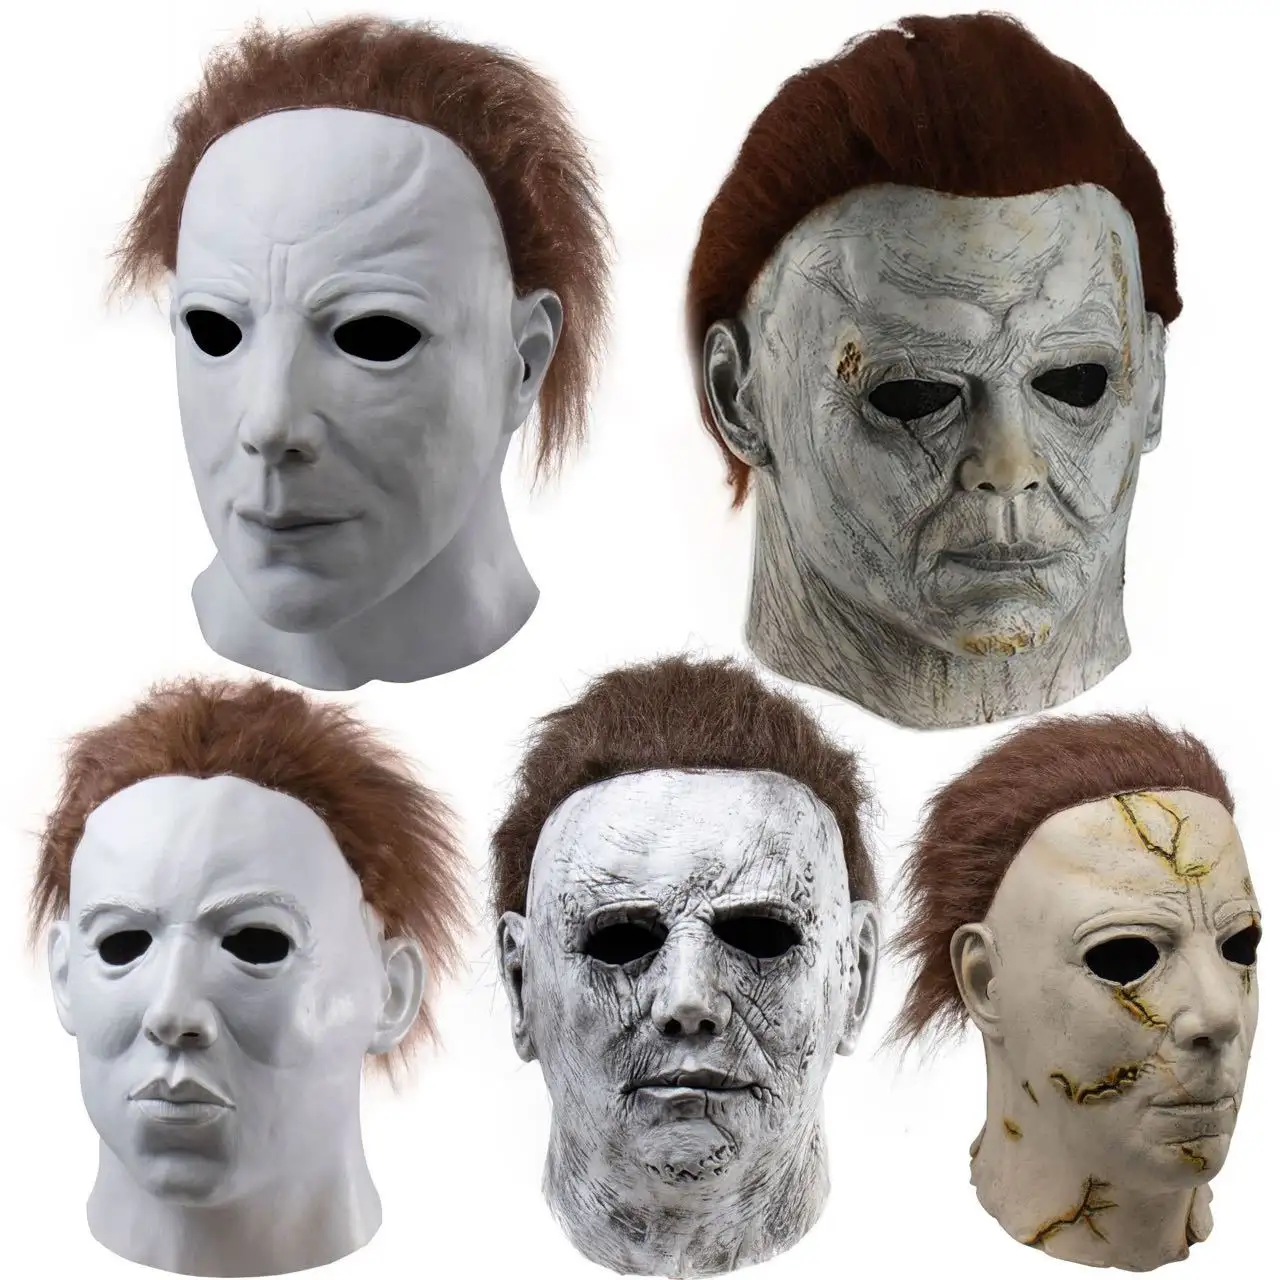 McMel film moonlight heart panic fear latex major McMel ghost head scary mask prop horror Michael Myers mask Movie Prop